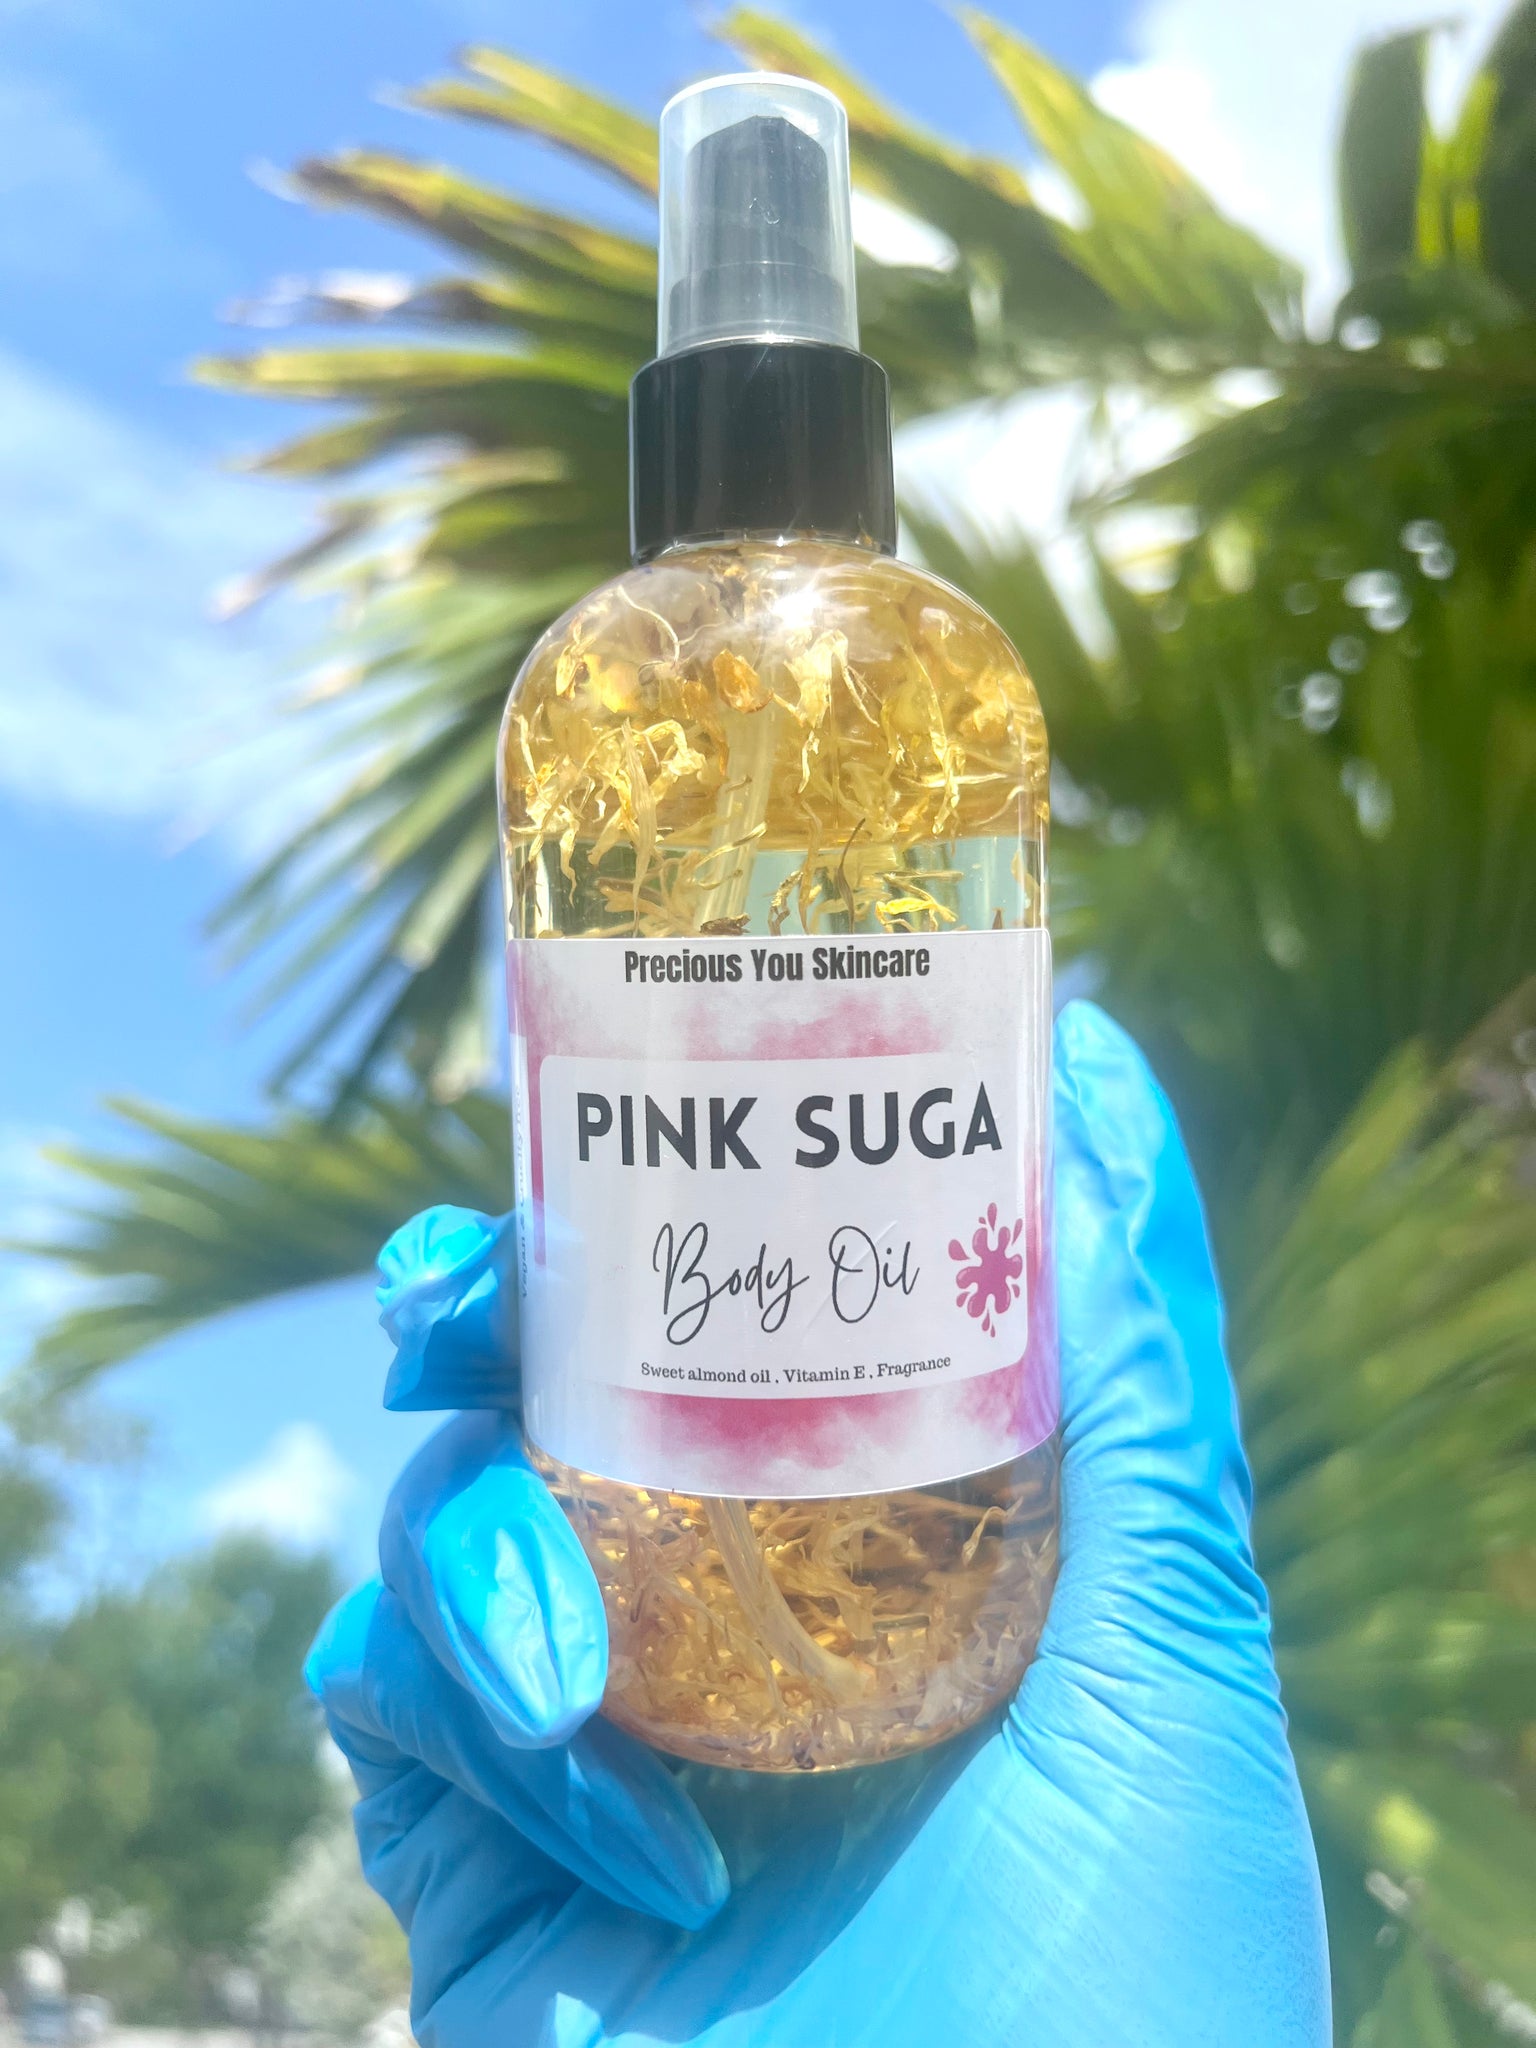 Pink Suga body oil